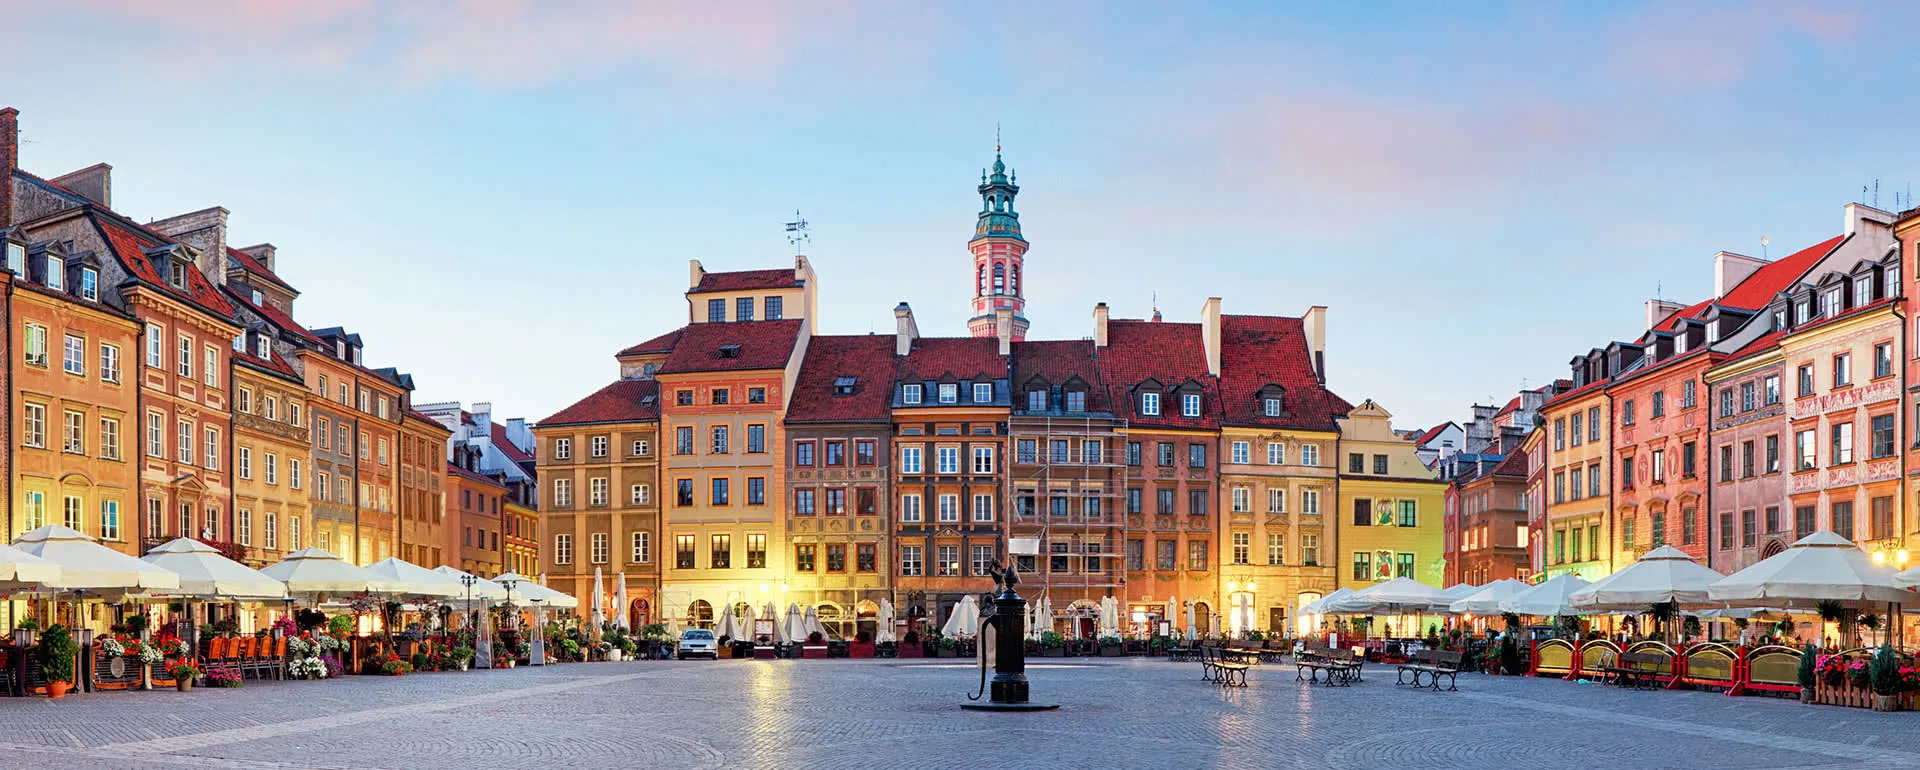 Warschau panorama image